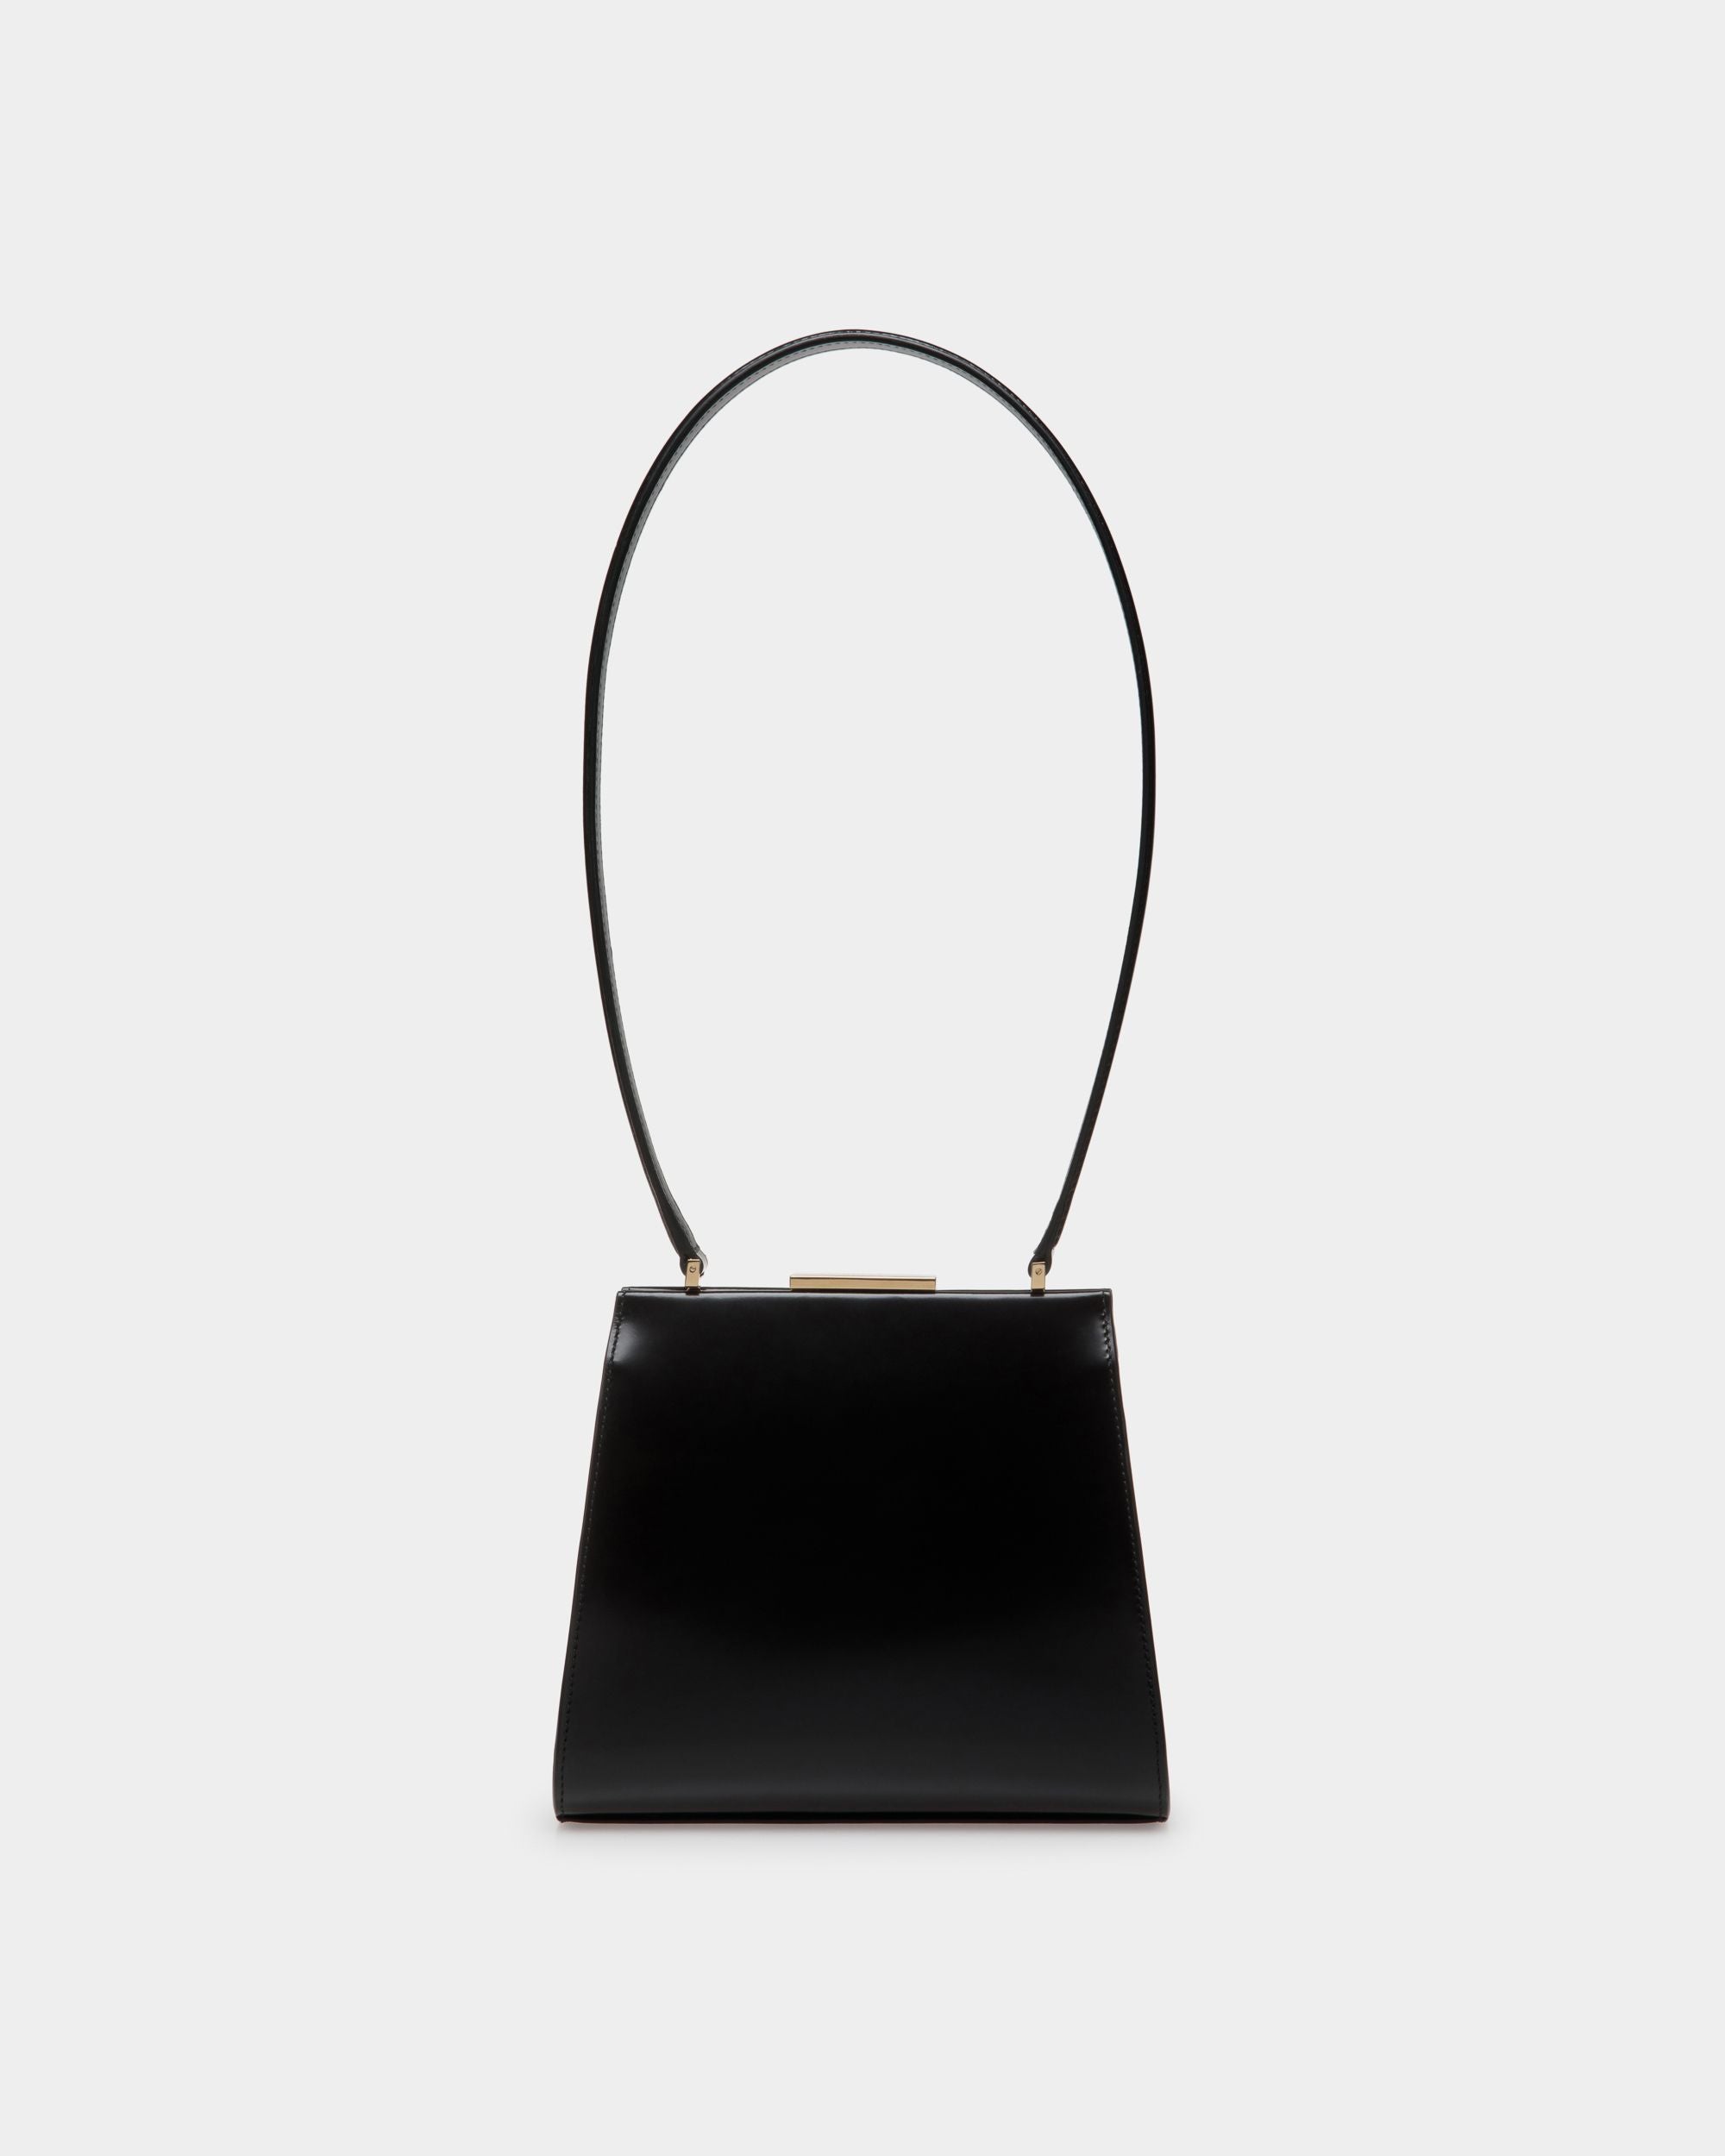 Deco | Women's Shoulder Bag in Black Brushed Leather | Bally | Still Life Front